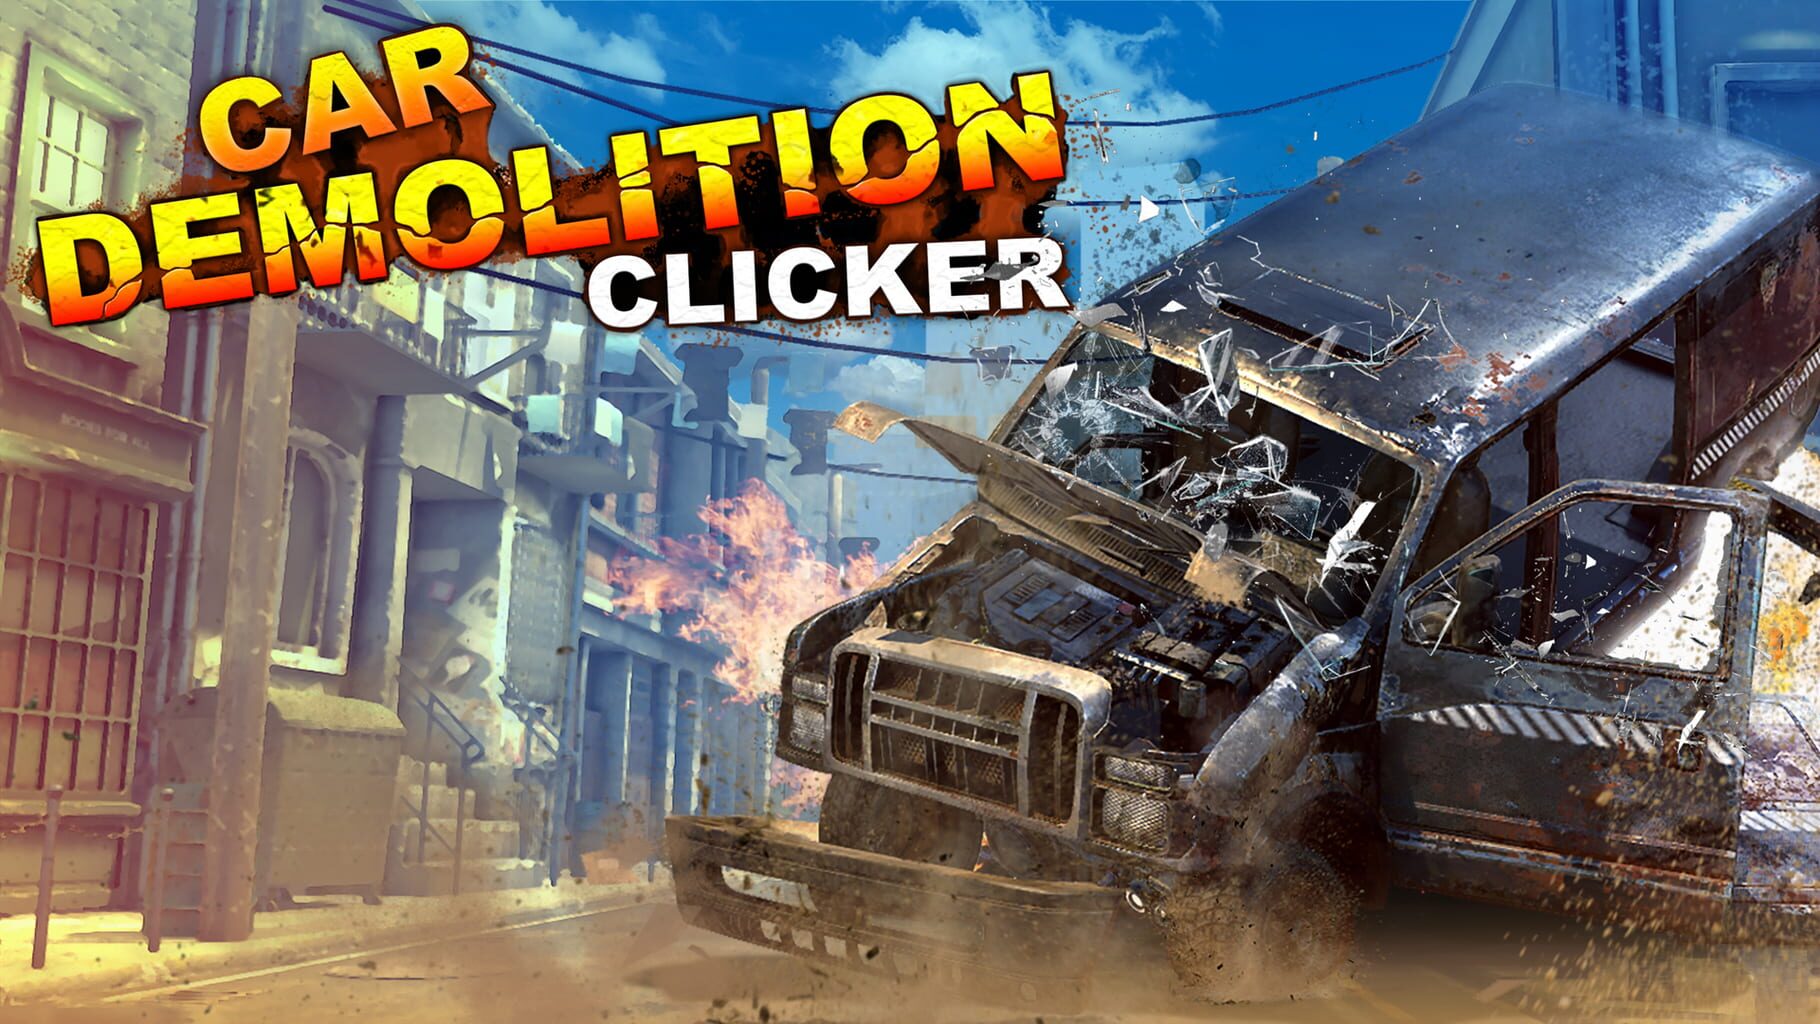 Car Demolition Clicker artwork